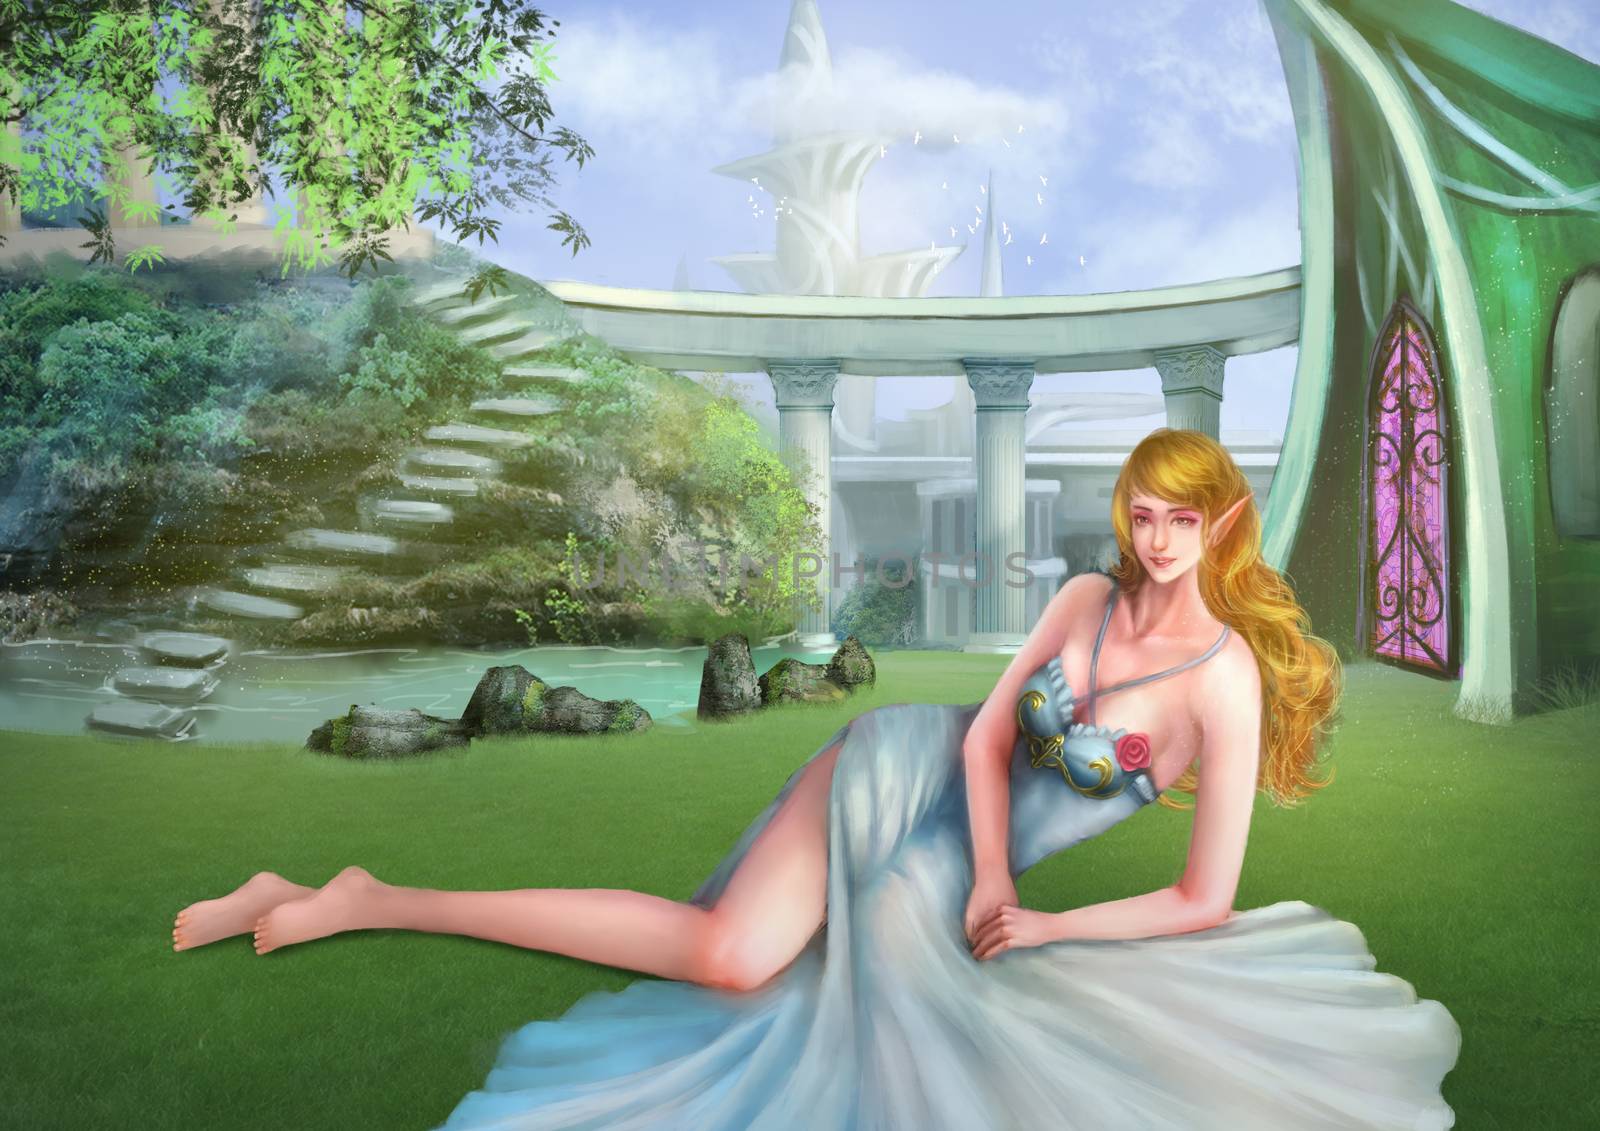 Illustration: The Elf in her Magical Garden. Fantastic Cartoon Style Wallpaper Background Scene Design. by NextMars